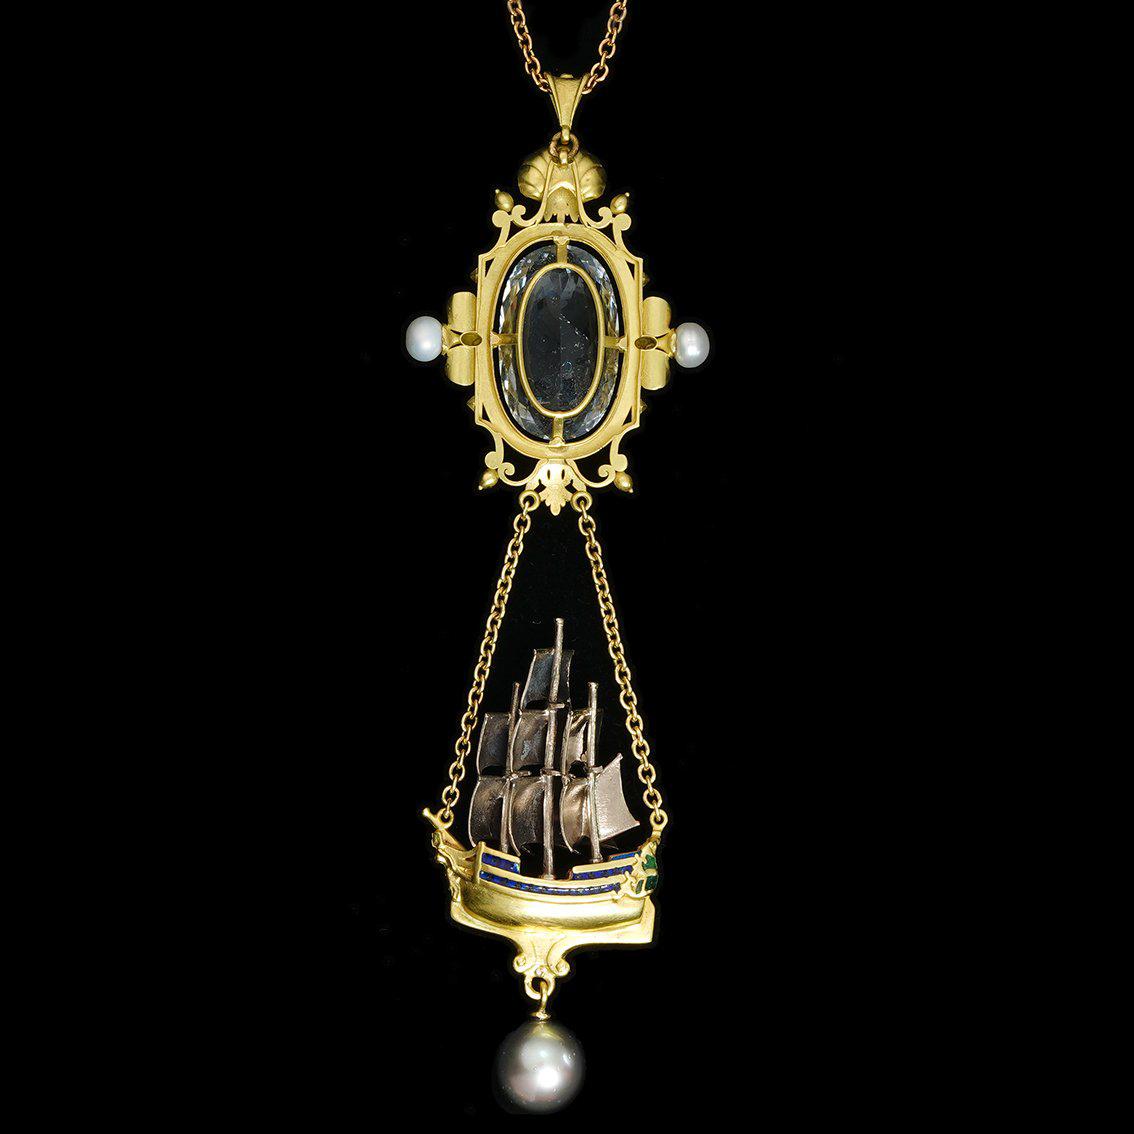 Aquamarine, Diamonds, Pearls, Enamel, 18kt Gold Antique Style Pendant Necklace For Sale 11